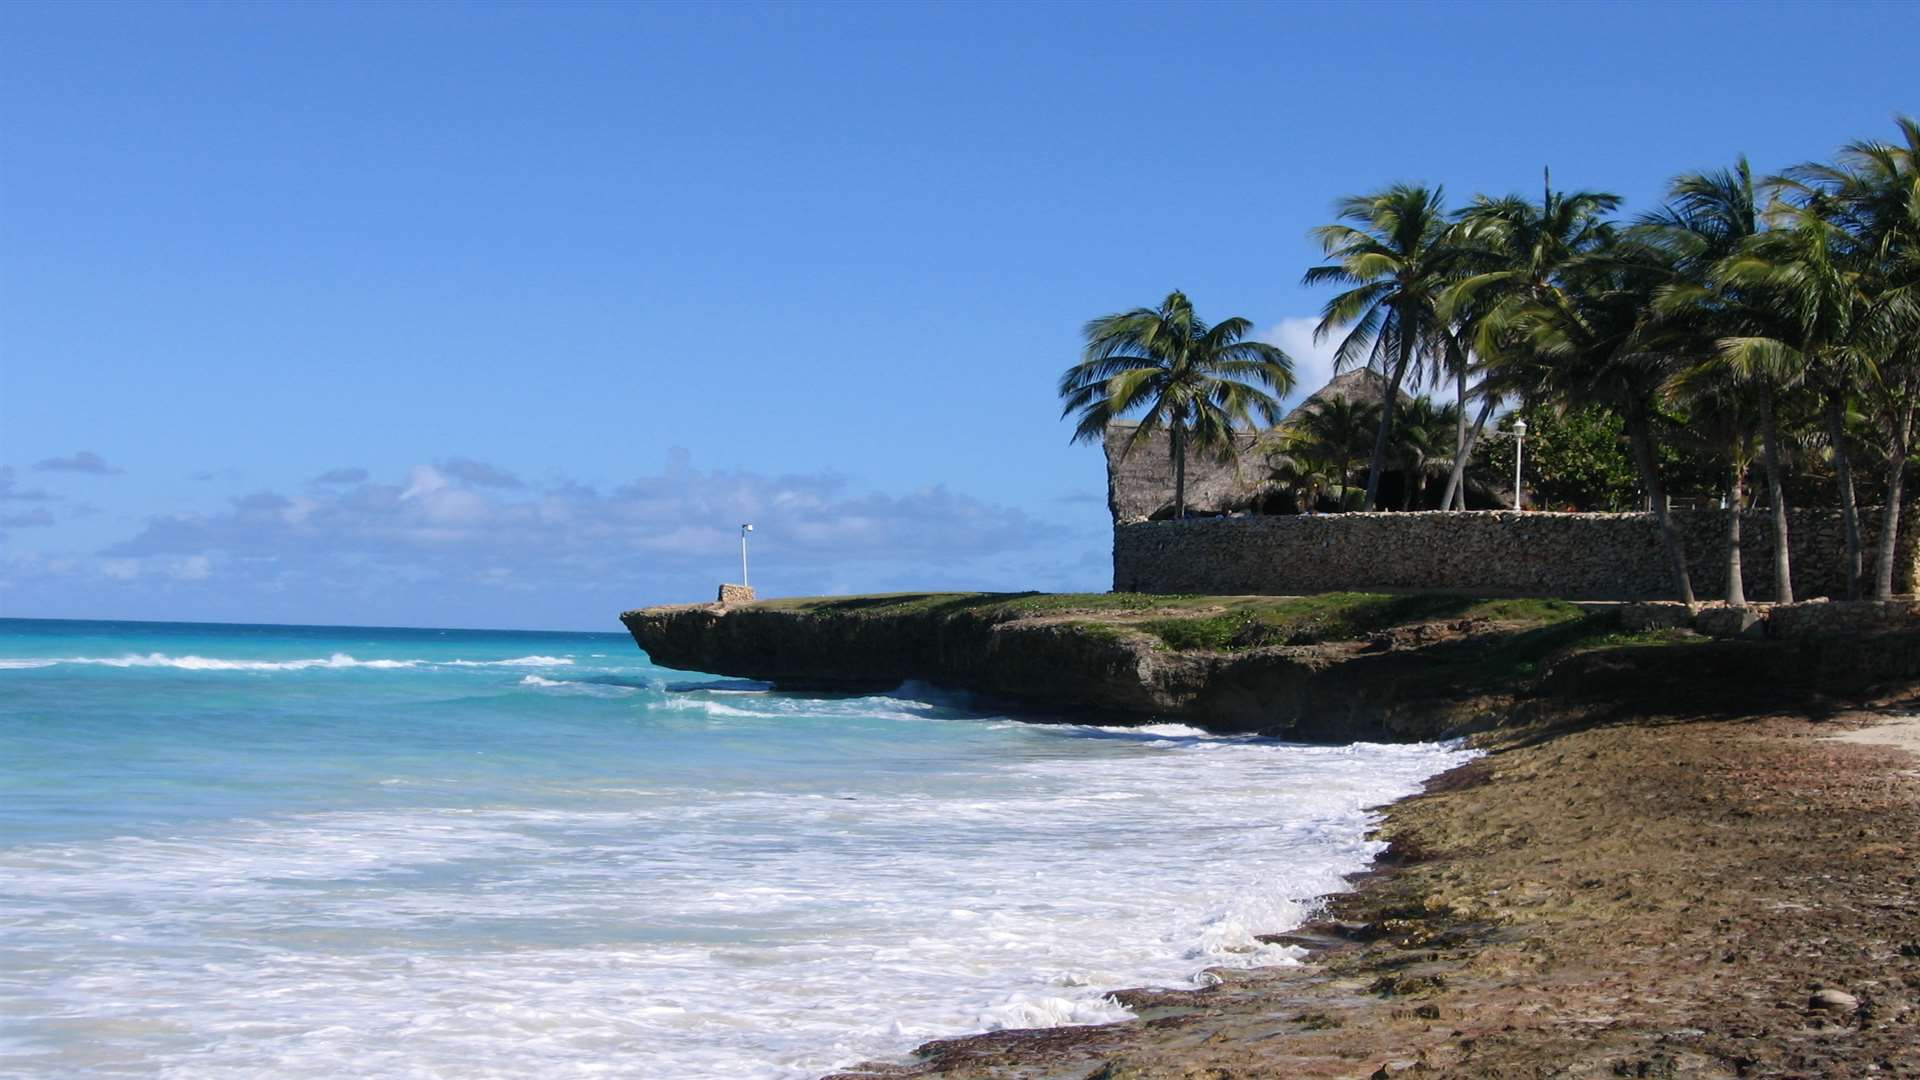 The Iberostar Laguna Azul is in Varadero, Cuba